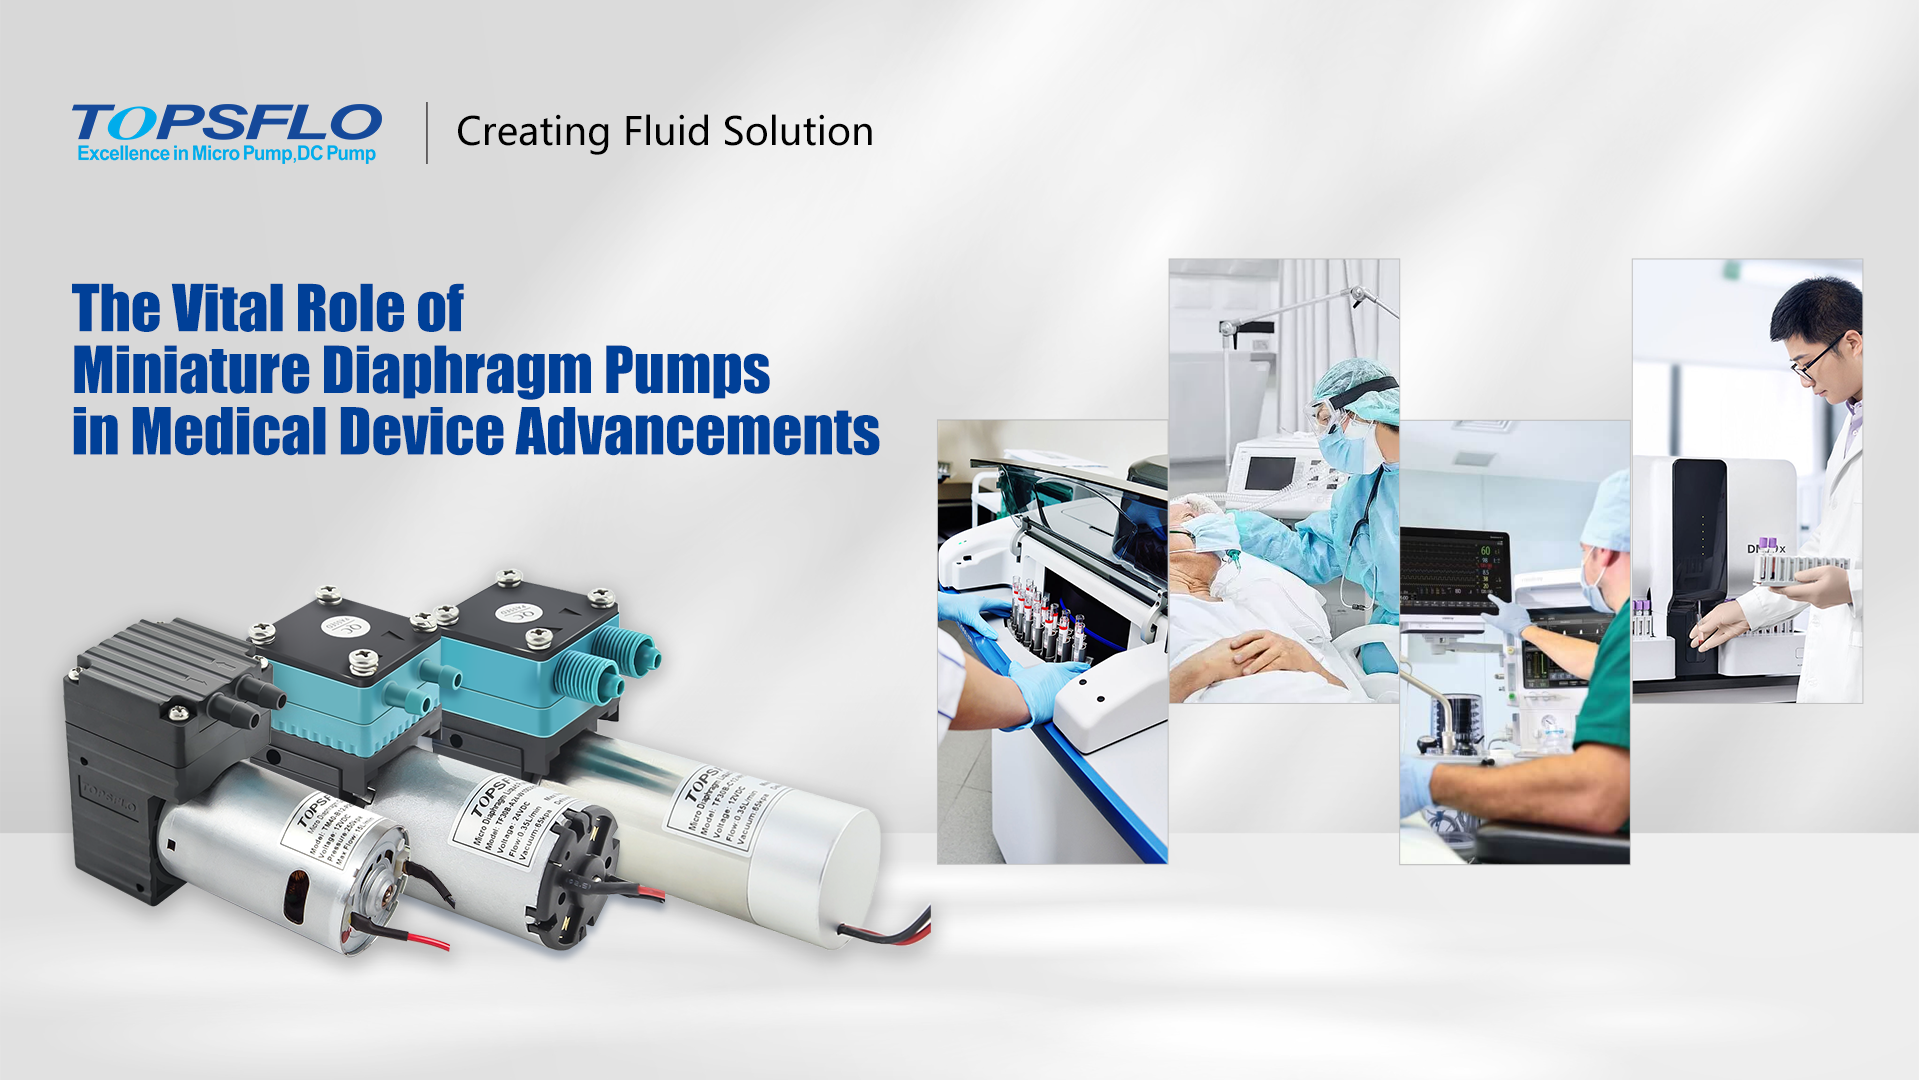 medical pump, IVD device pumo, medical device pump